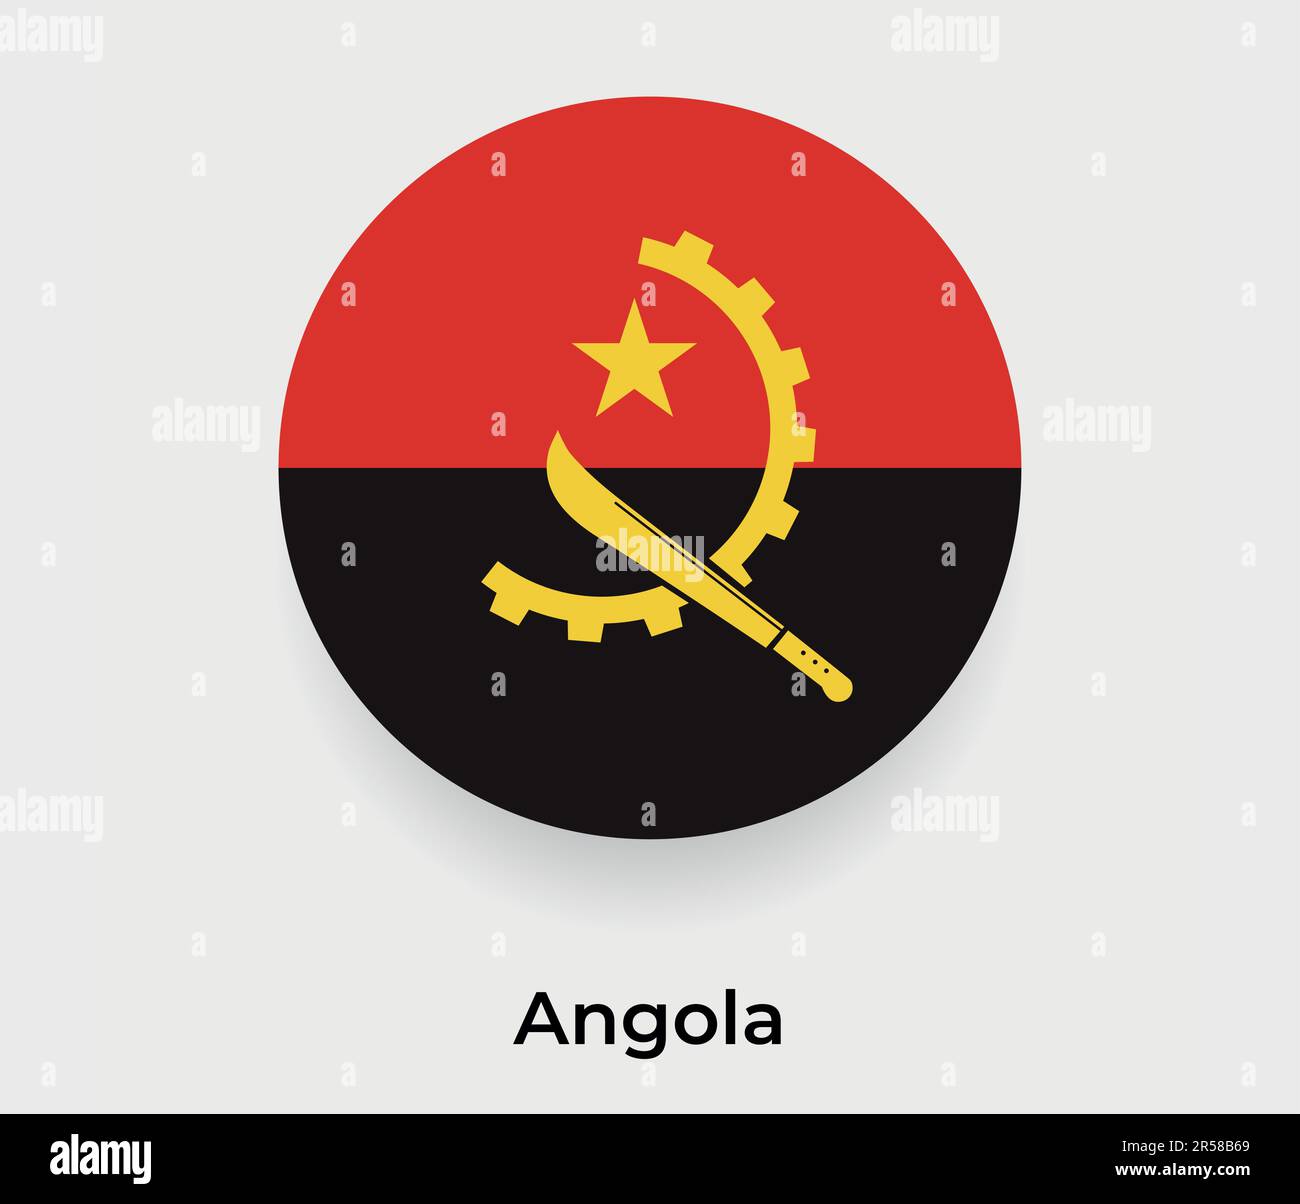 Angola flag bubble circle round shape icon vector illustration Stock Vector